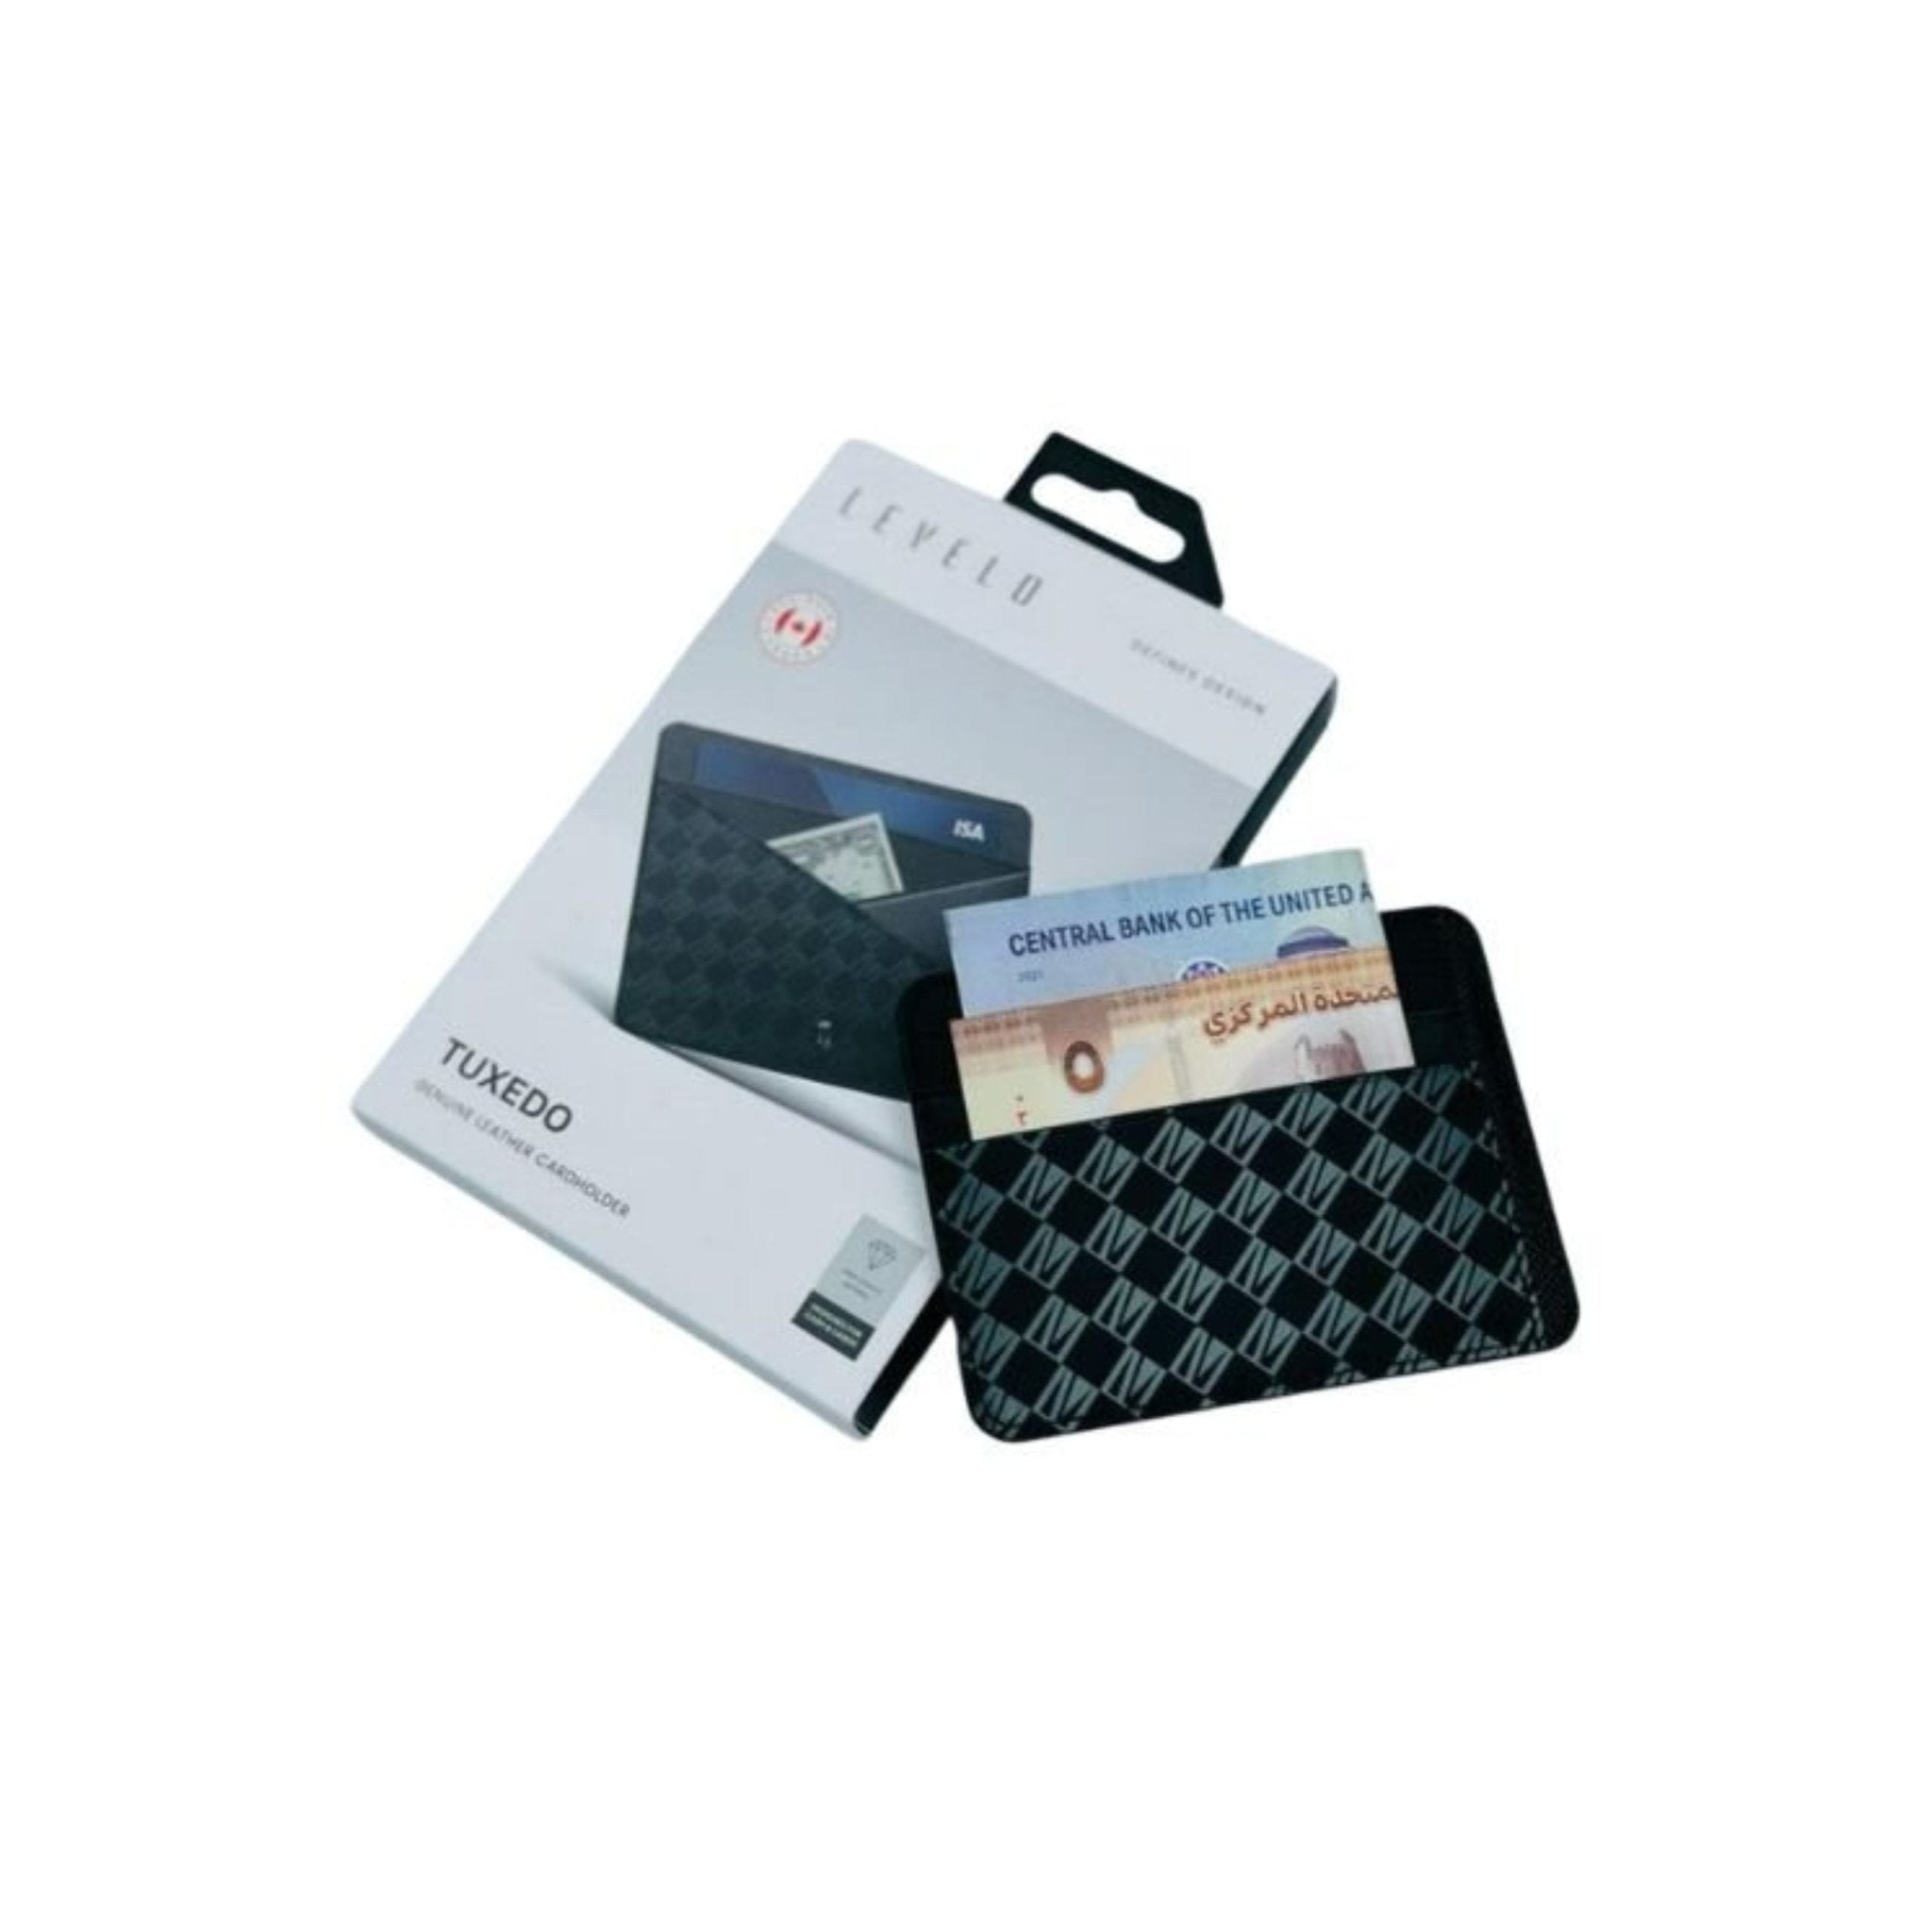 LEVELO Tuxedo Genuine Leather Cardholder Wallet - Black